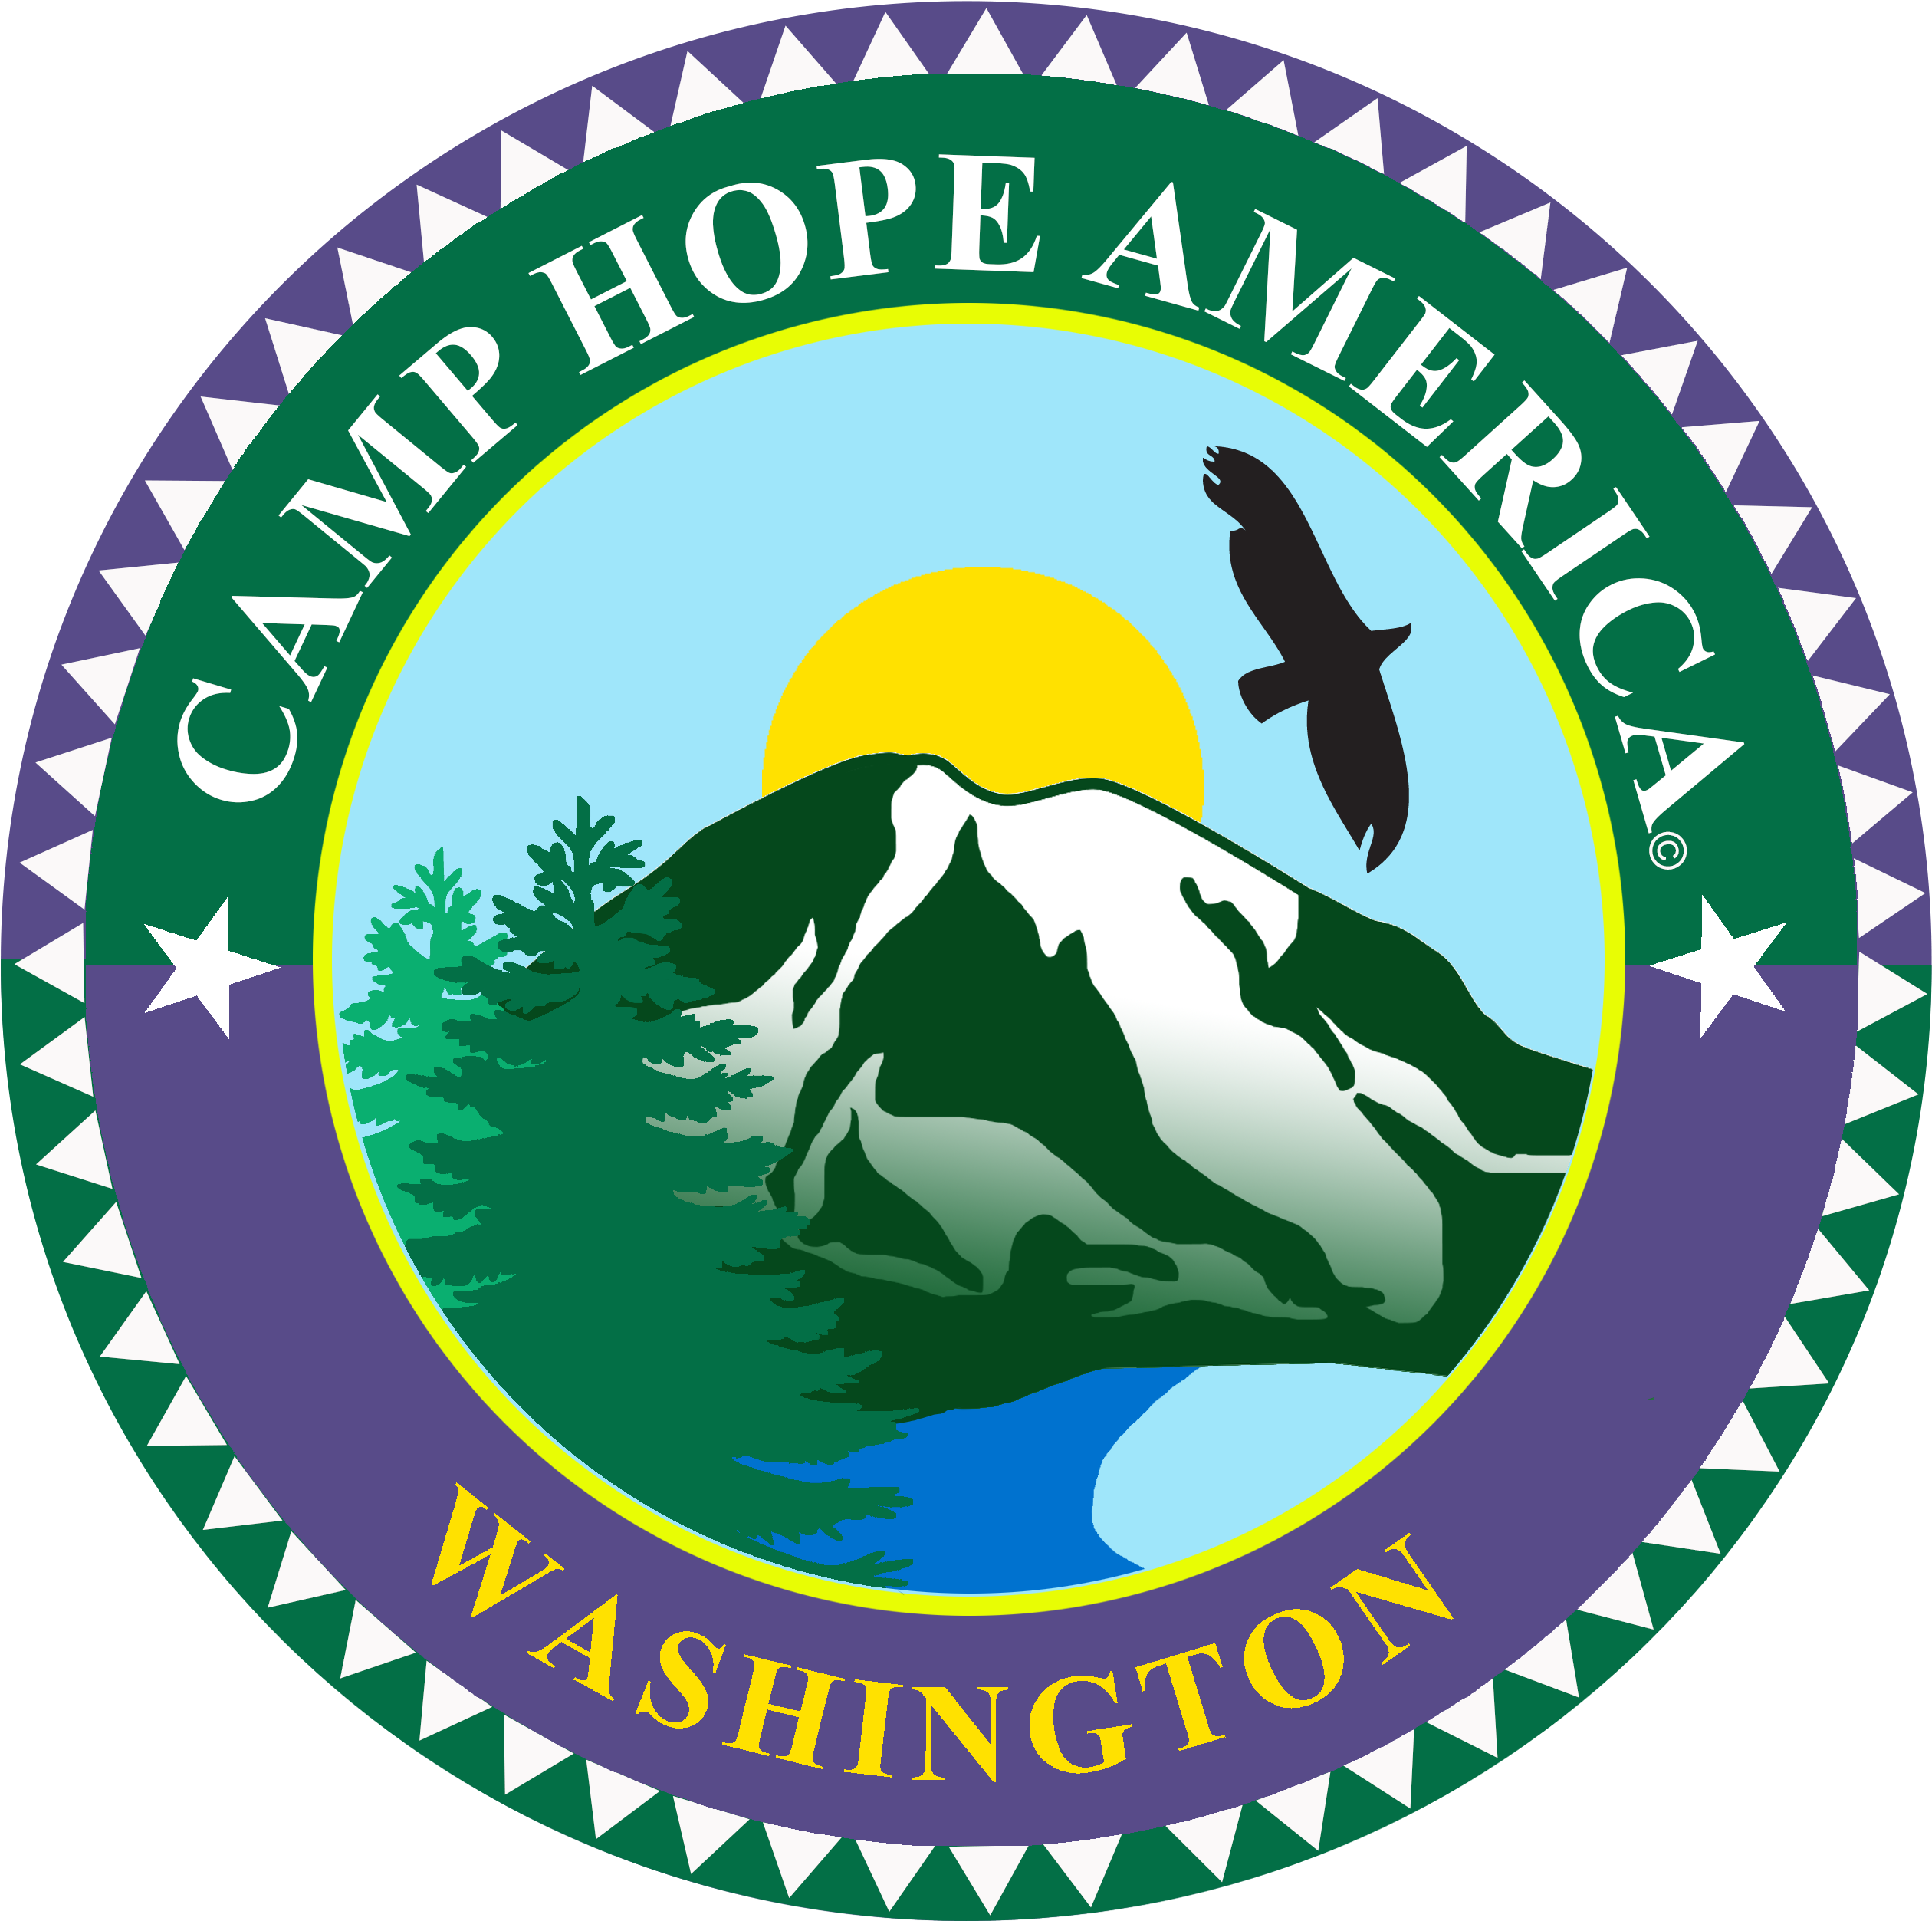 Camp Hope Washington - Camp Hope America (2688x2674)